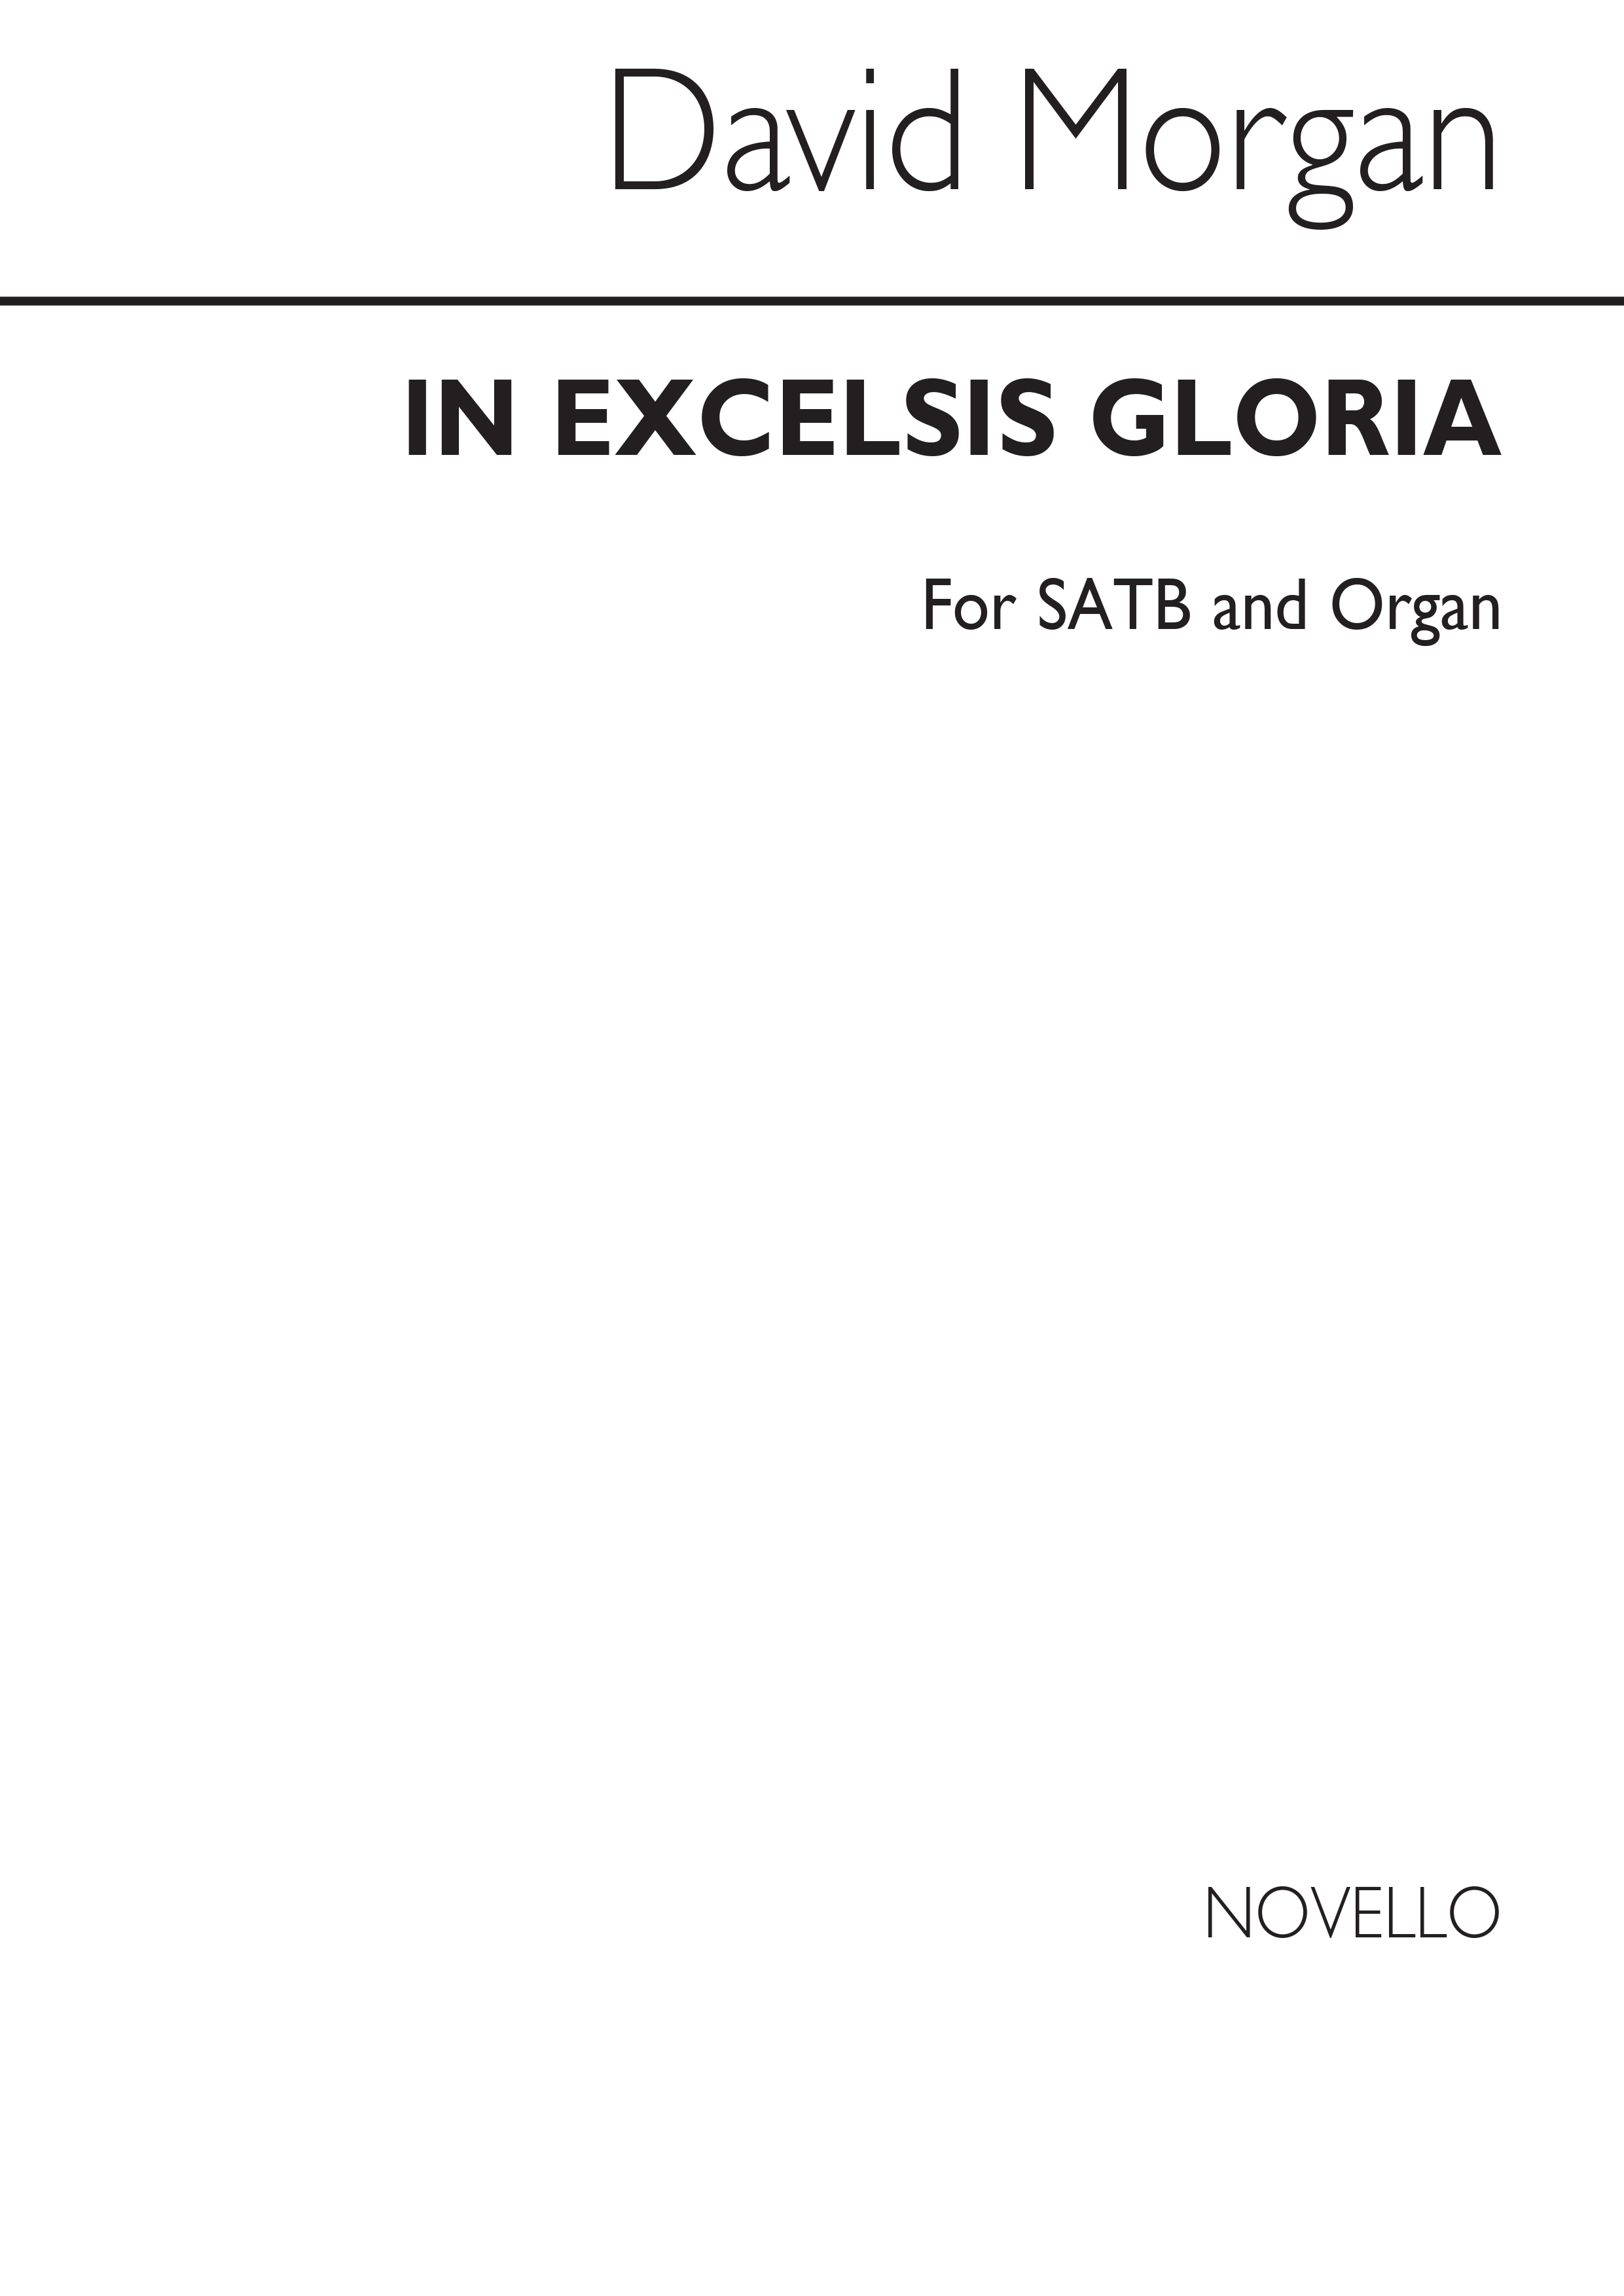 Morgan: In Excelsis Gloria for SATB Chorus